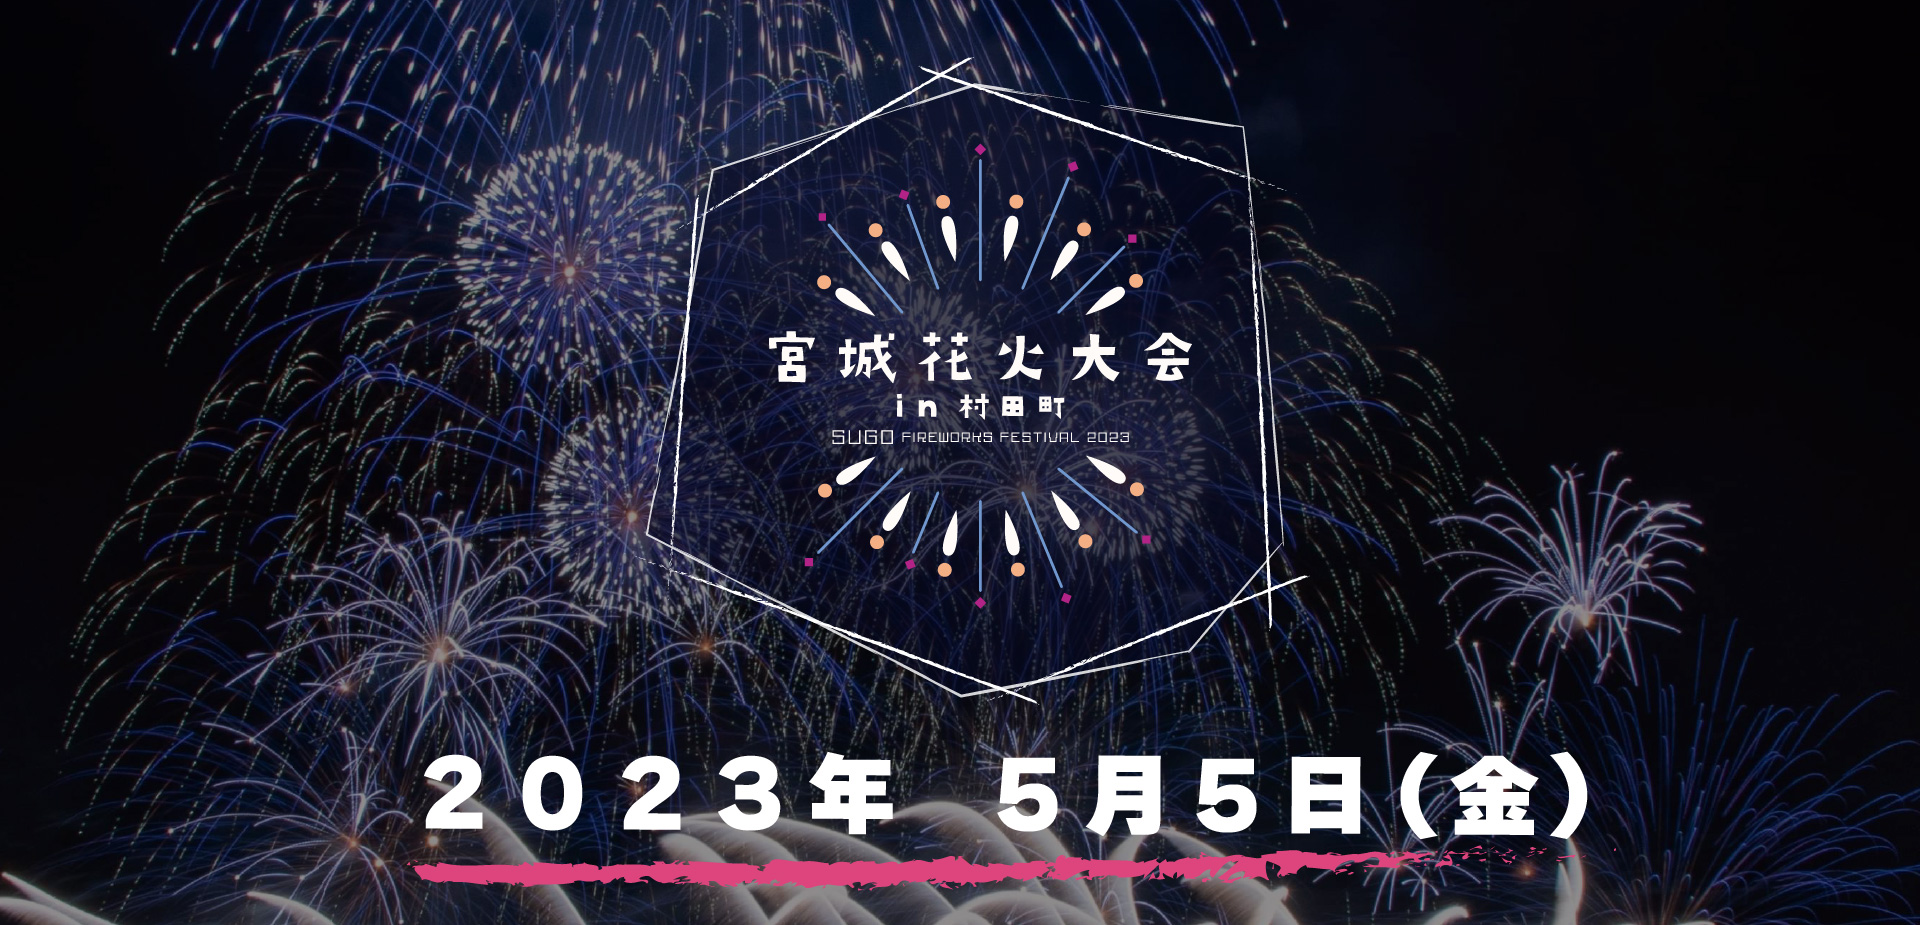 宮城花火大会in村田町 –SUGO FIREWORKS FESTIVAL 2023-